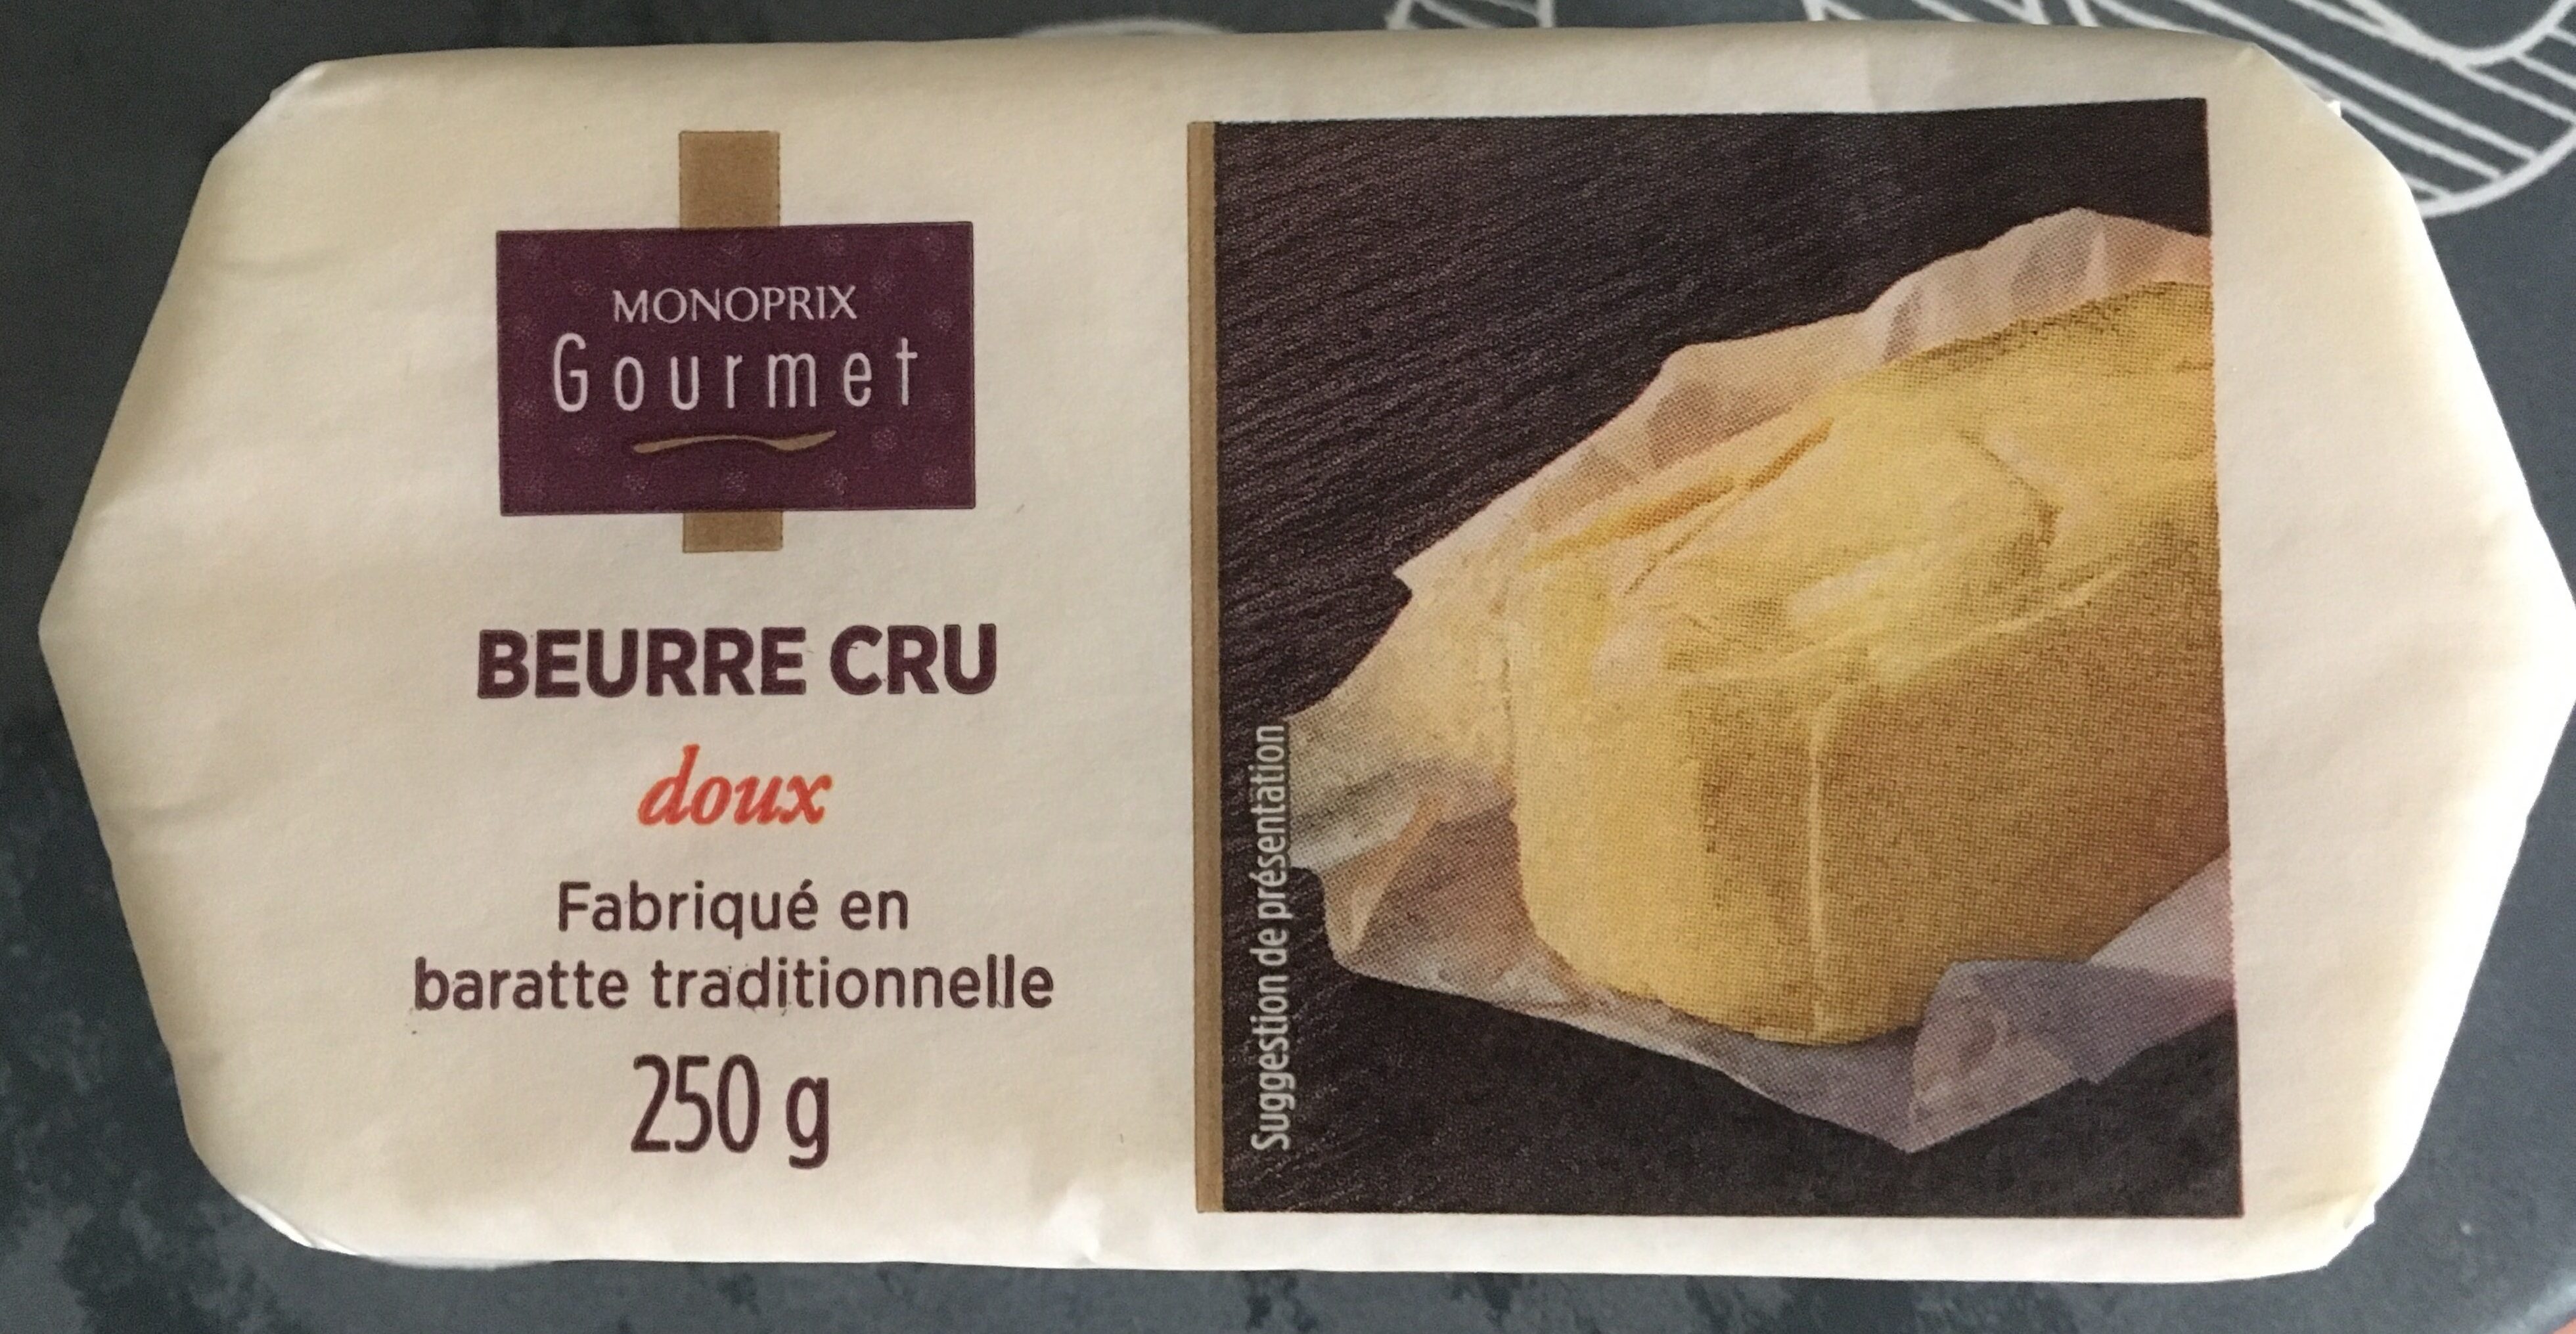 Beurre cru doux - Product - fr